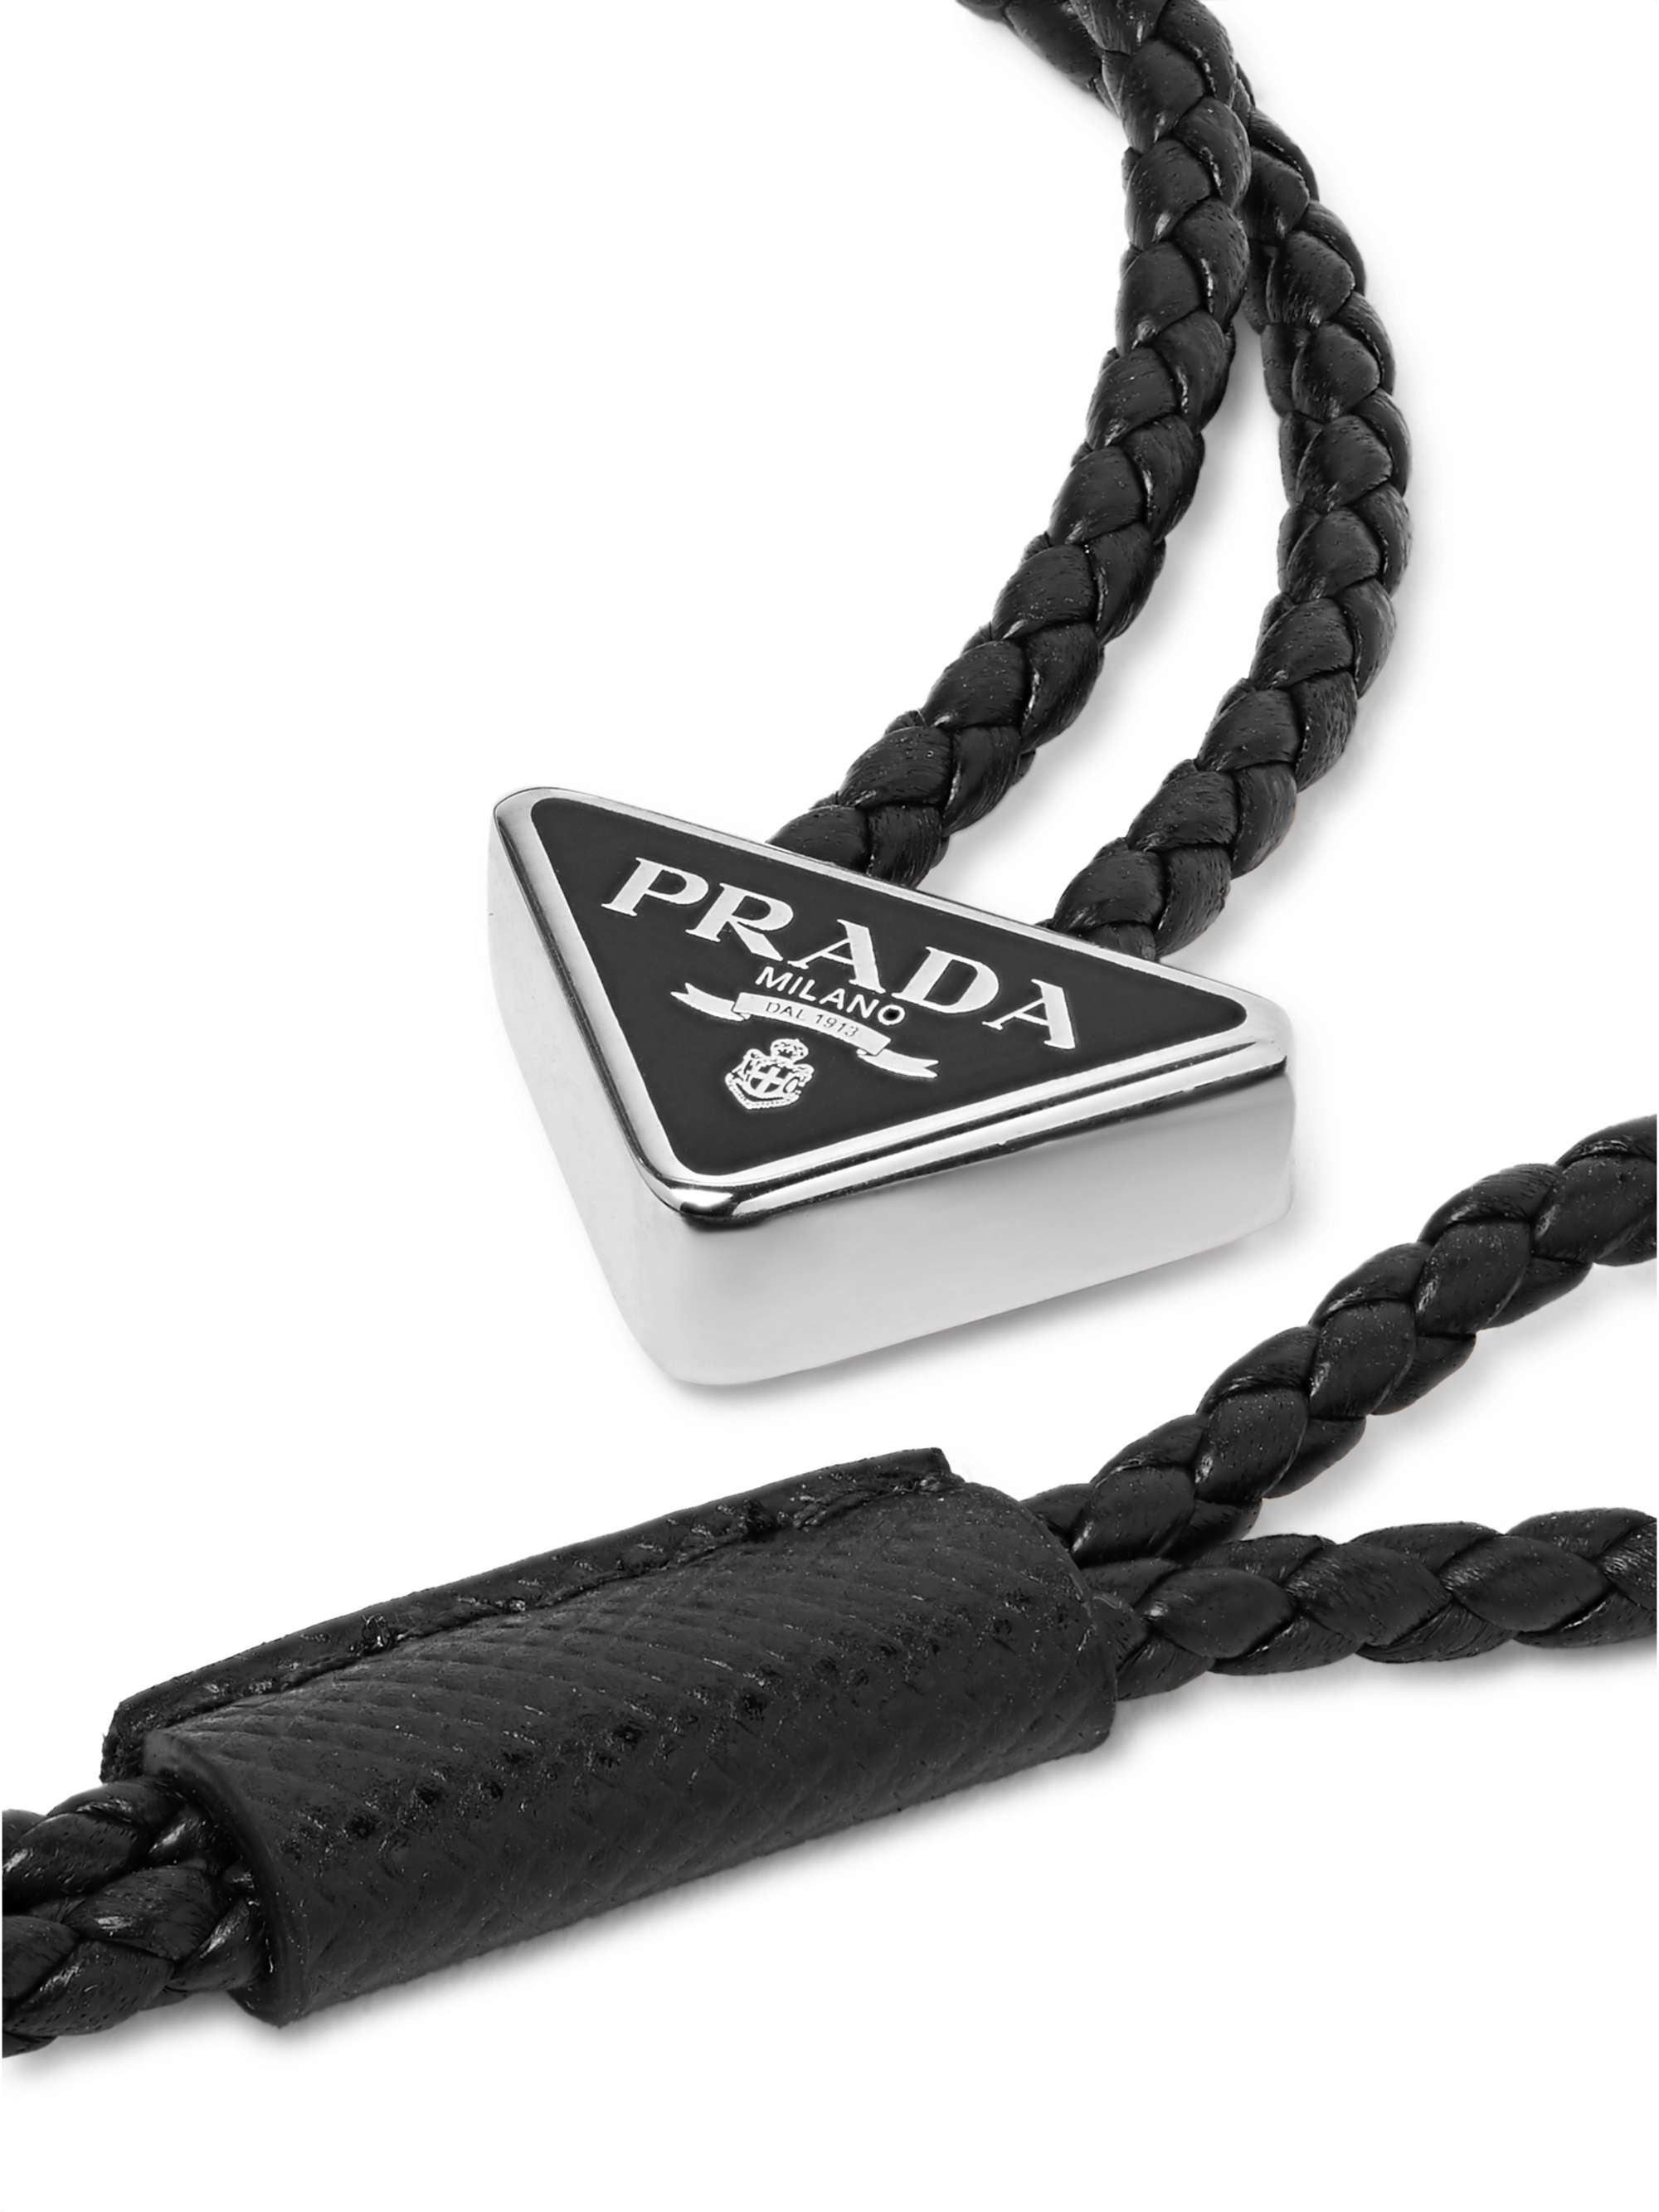 PRADA Woven Leather Bracelet